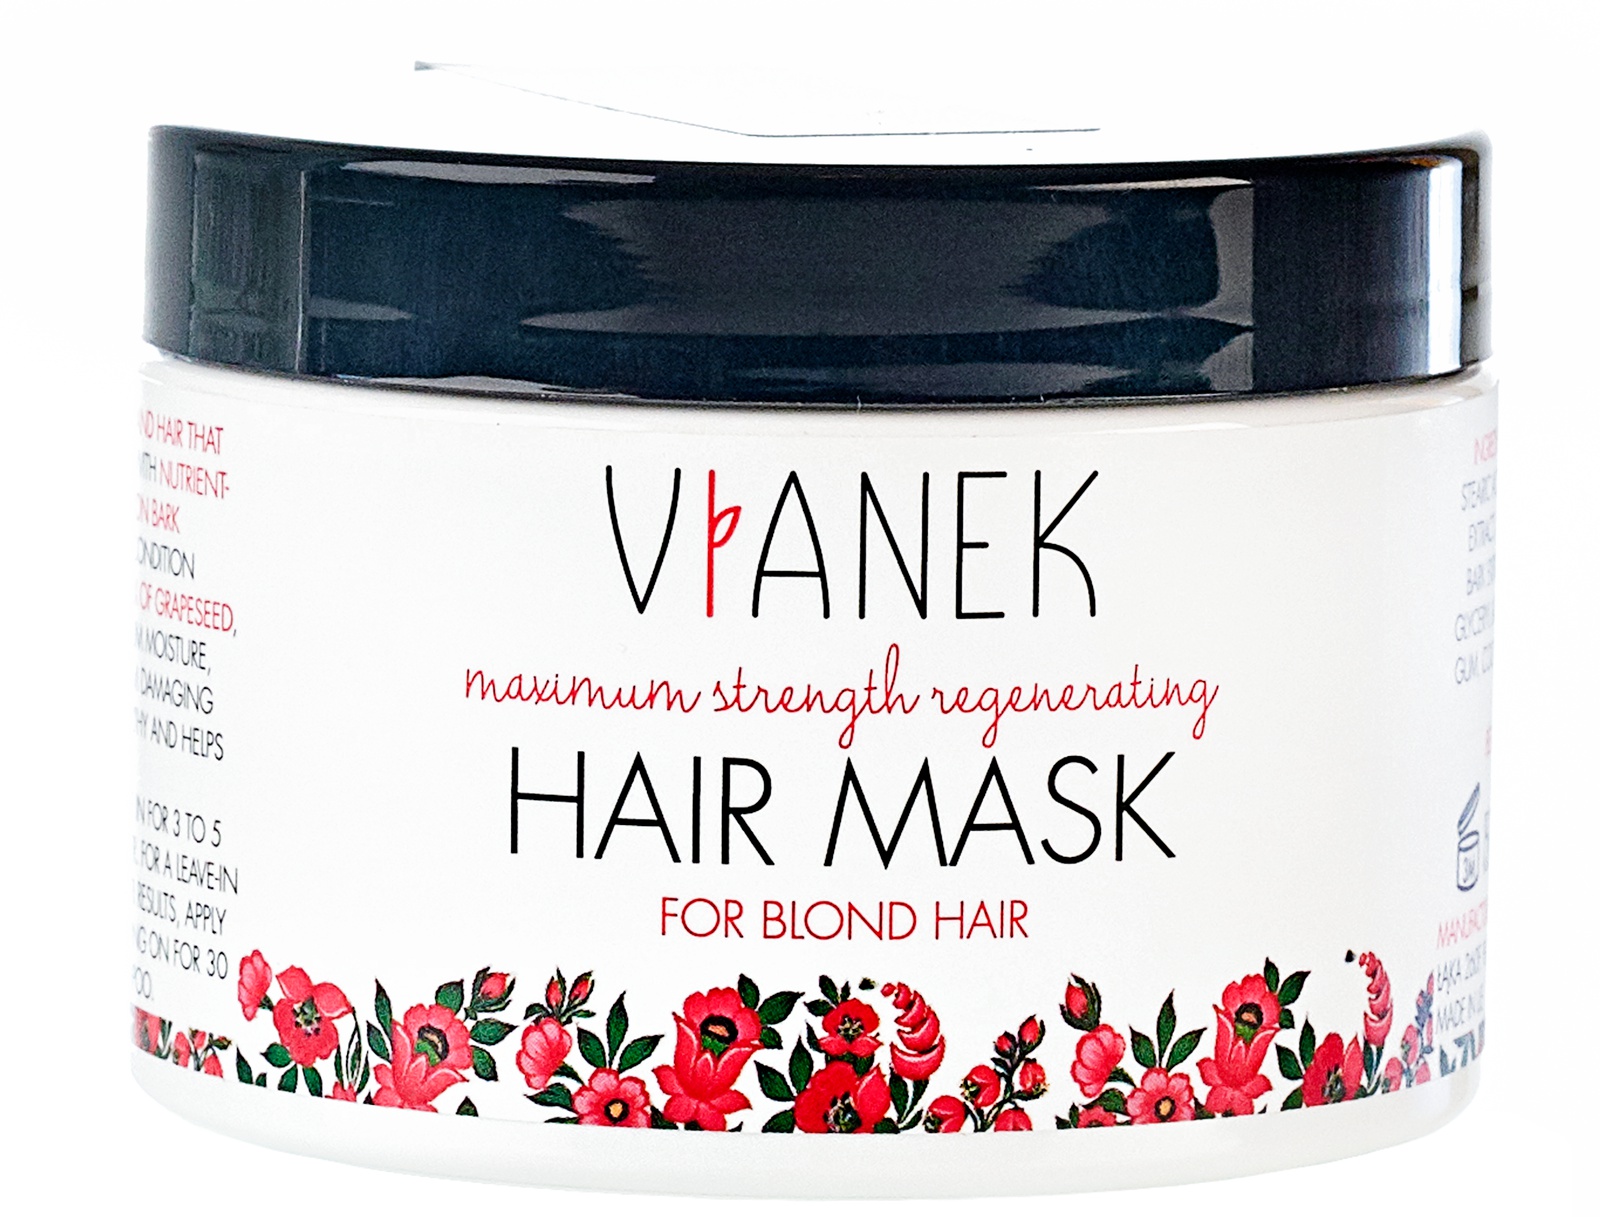 Vianek Maximum Strength Regenerating Mask For Blond Hair